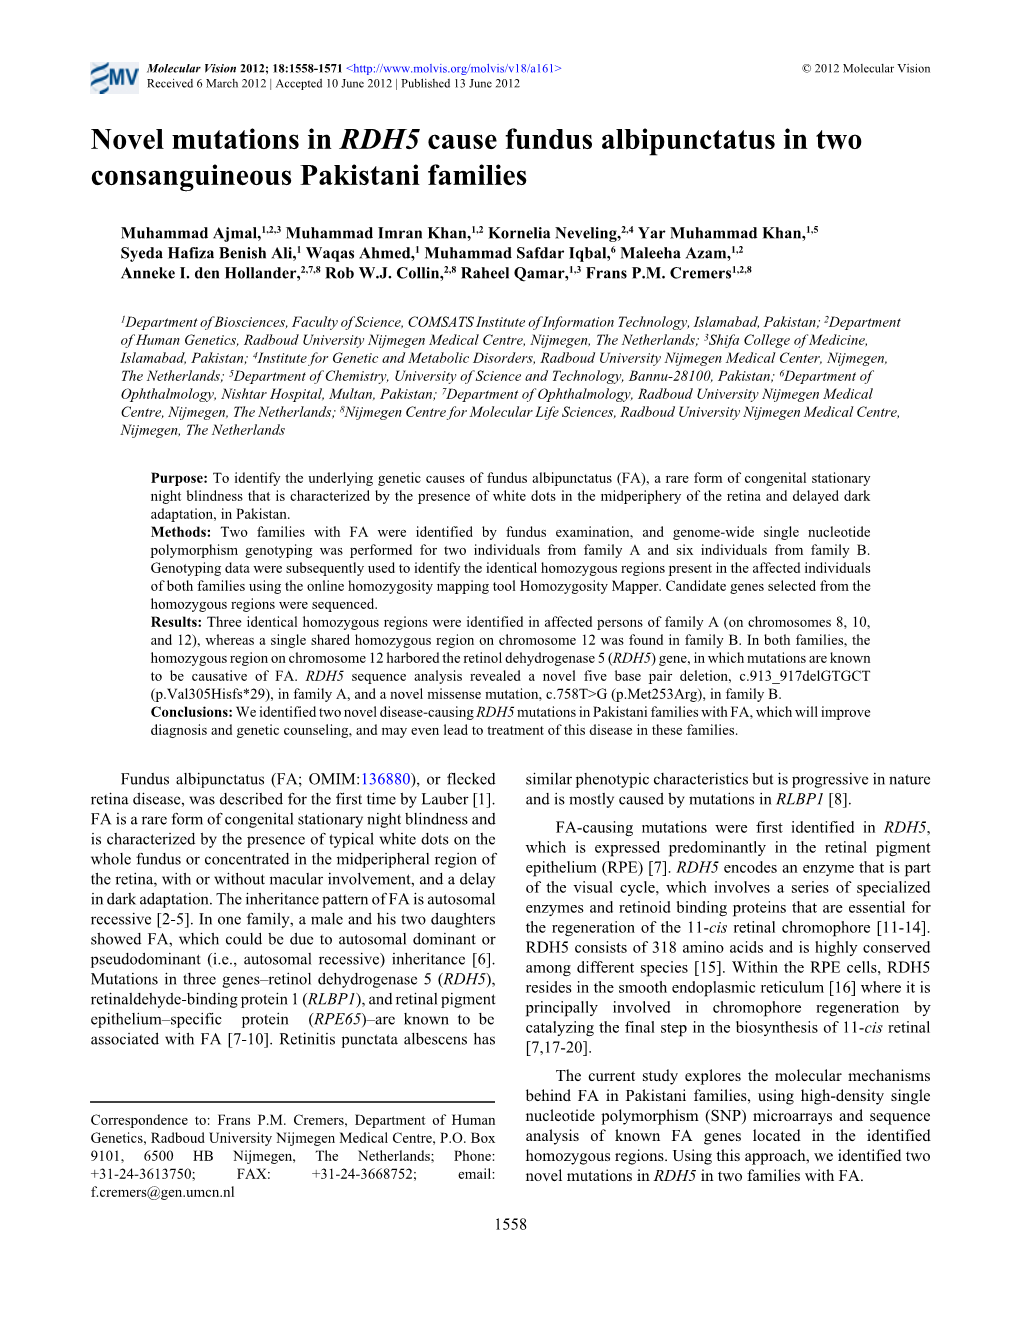 Novel Mutations in RDH5 Cause Fundus Albipunctatus in Two Consanguineous Pakistani Families